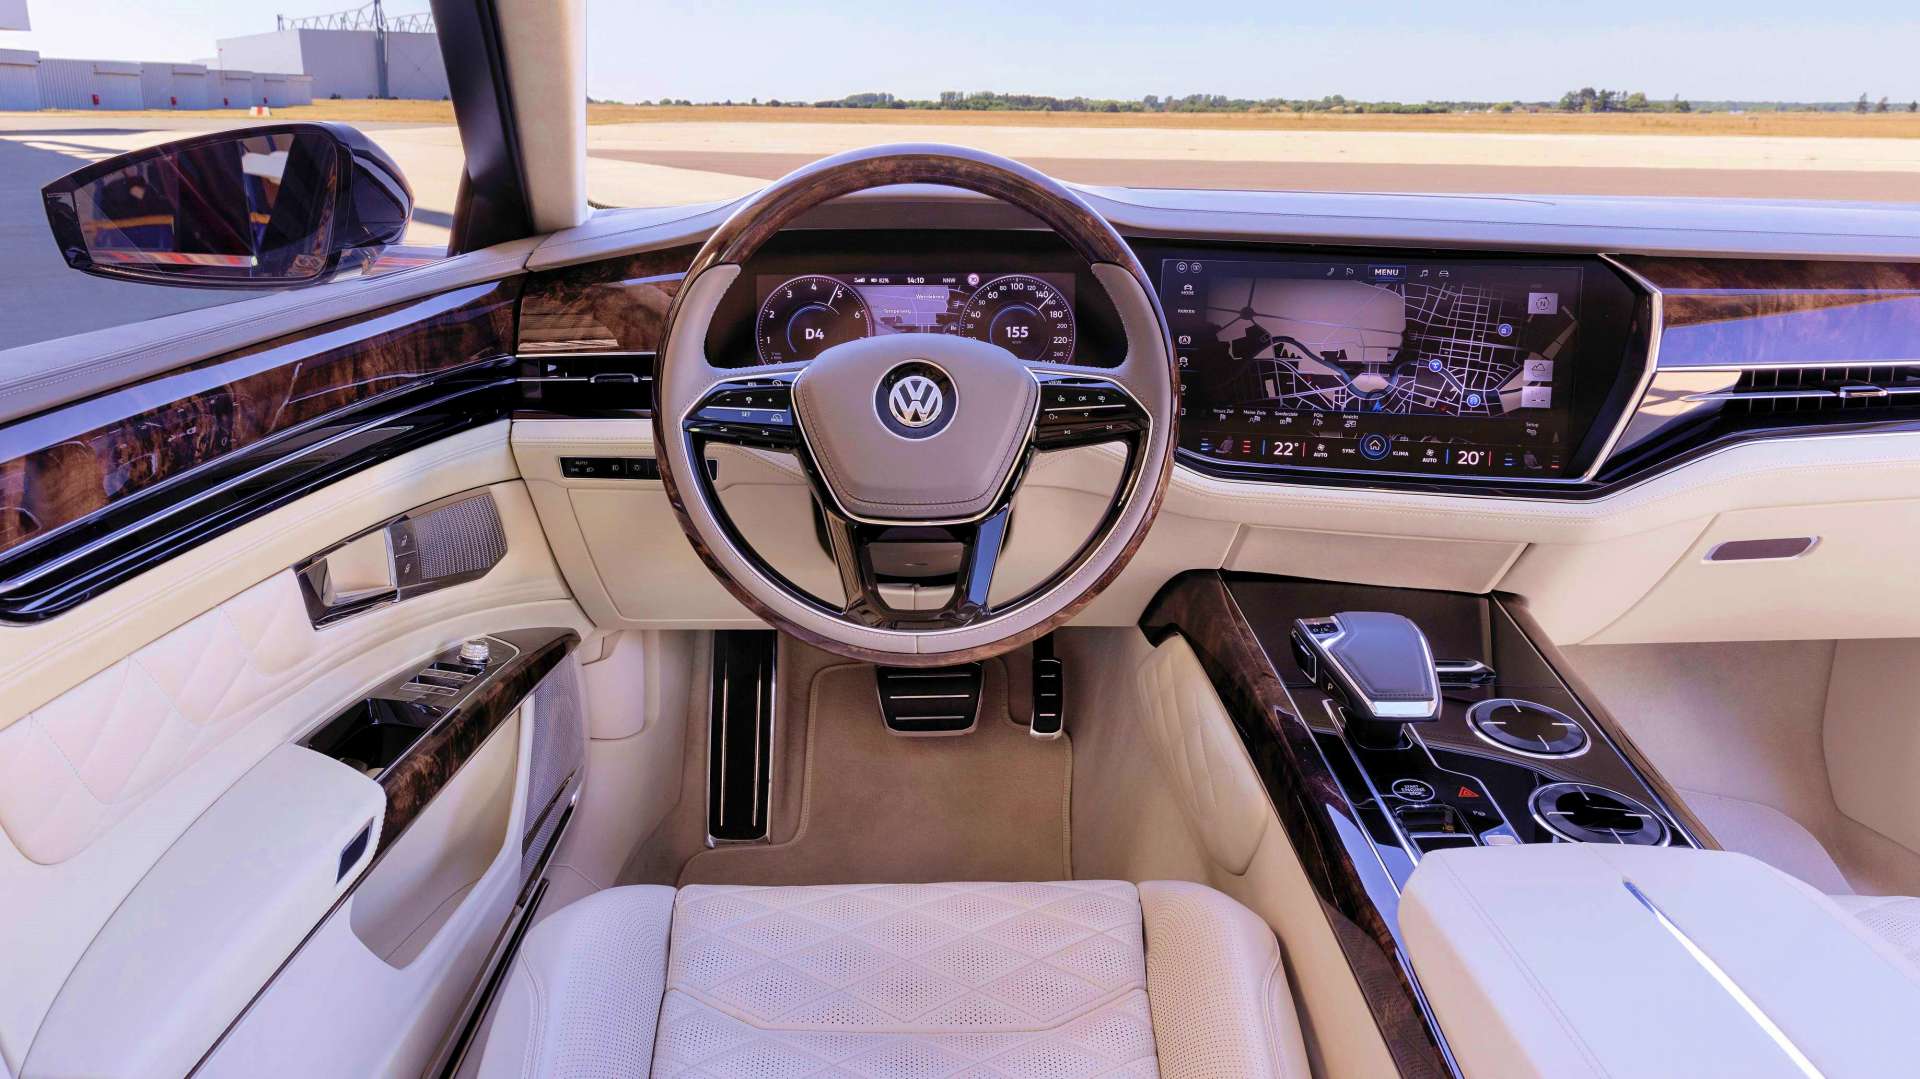 VW Phaeton D2 interior